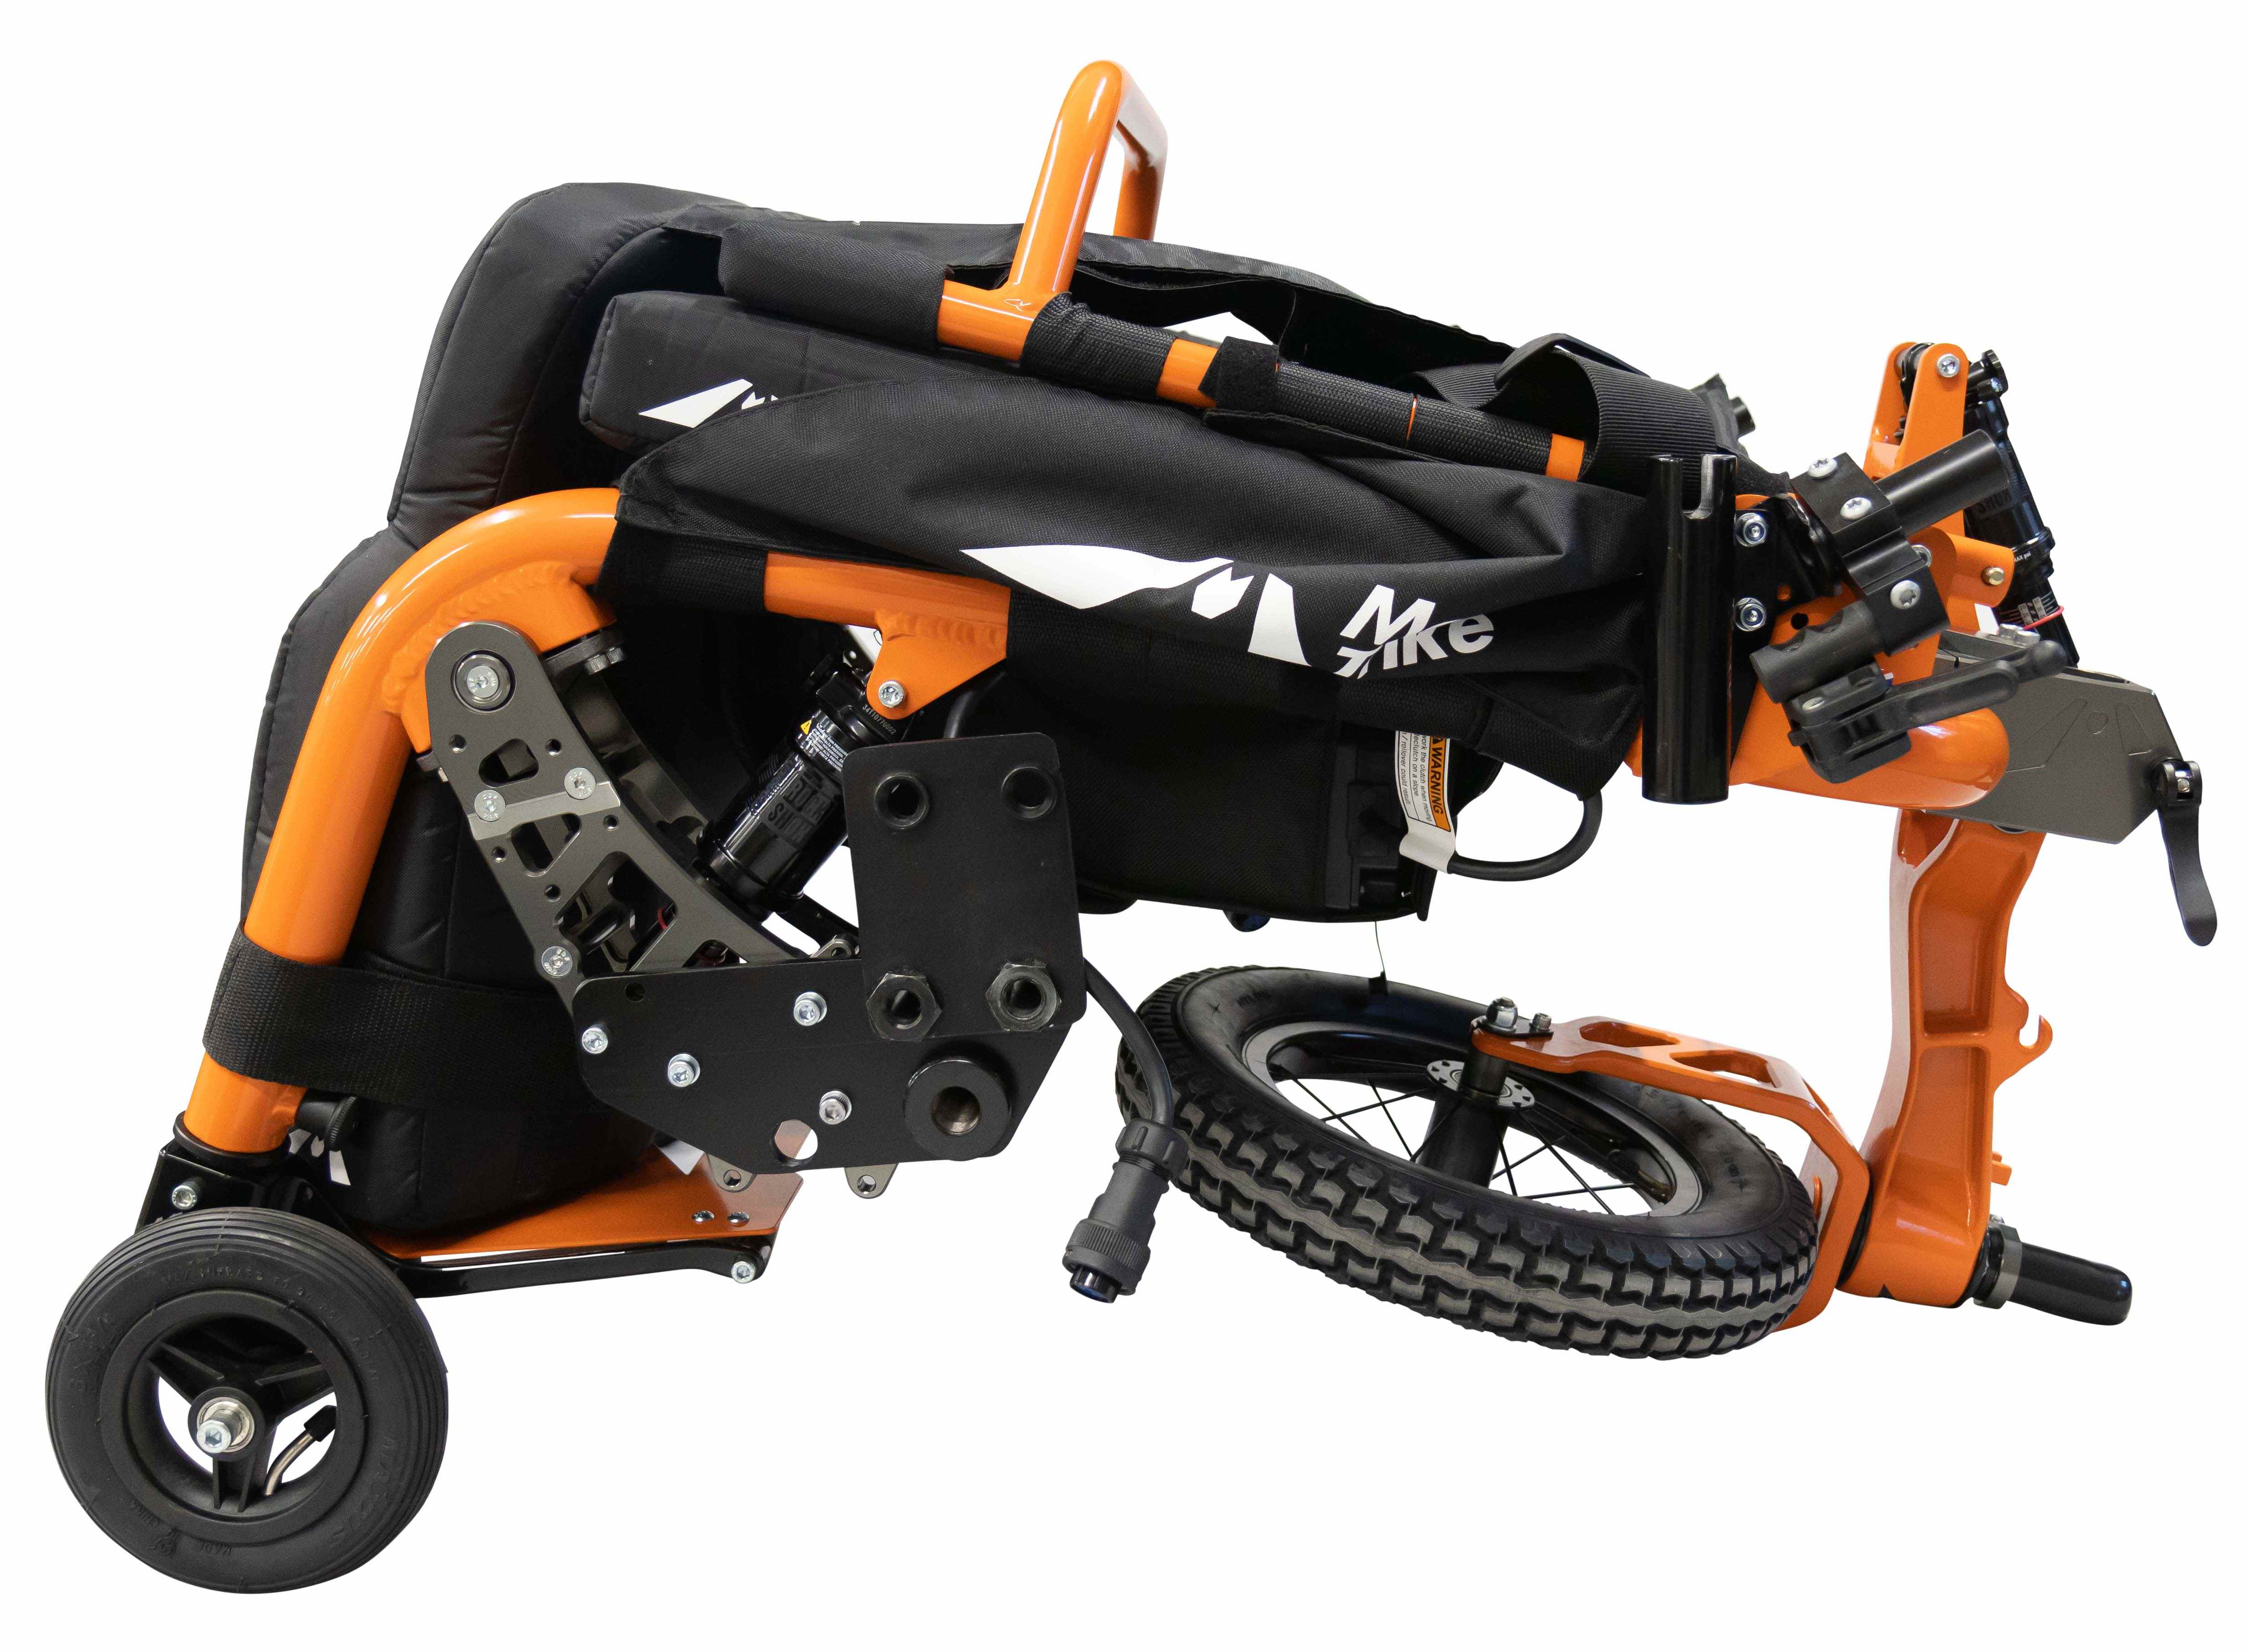 SDMotion Trike easily transportable